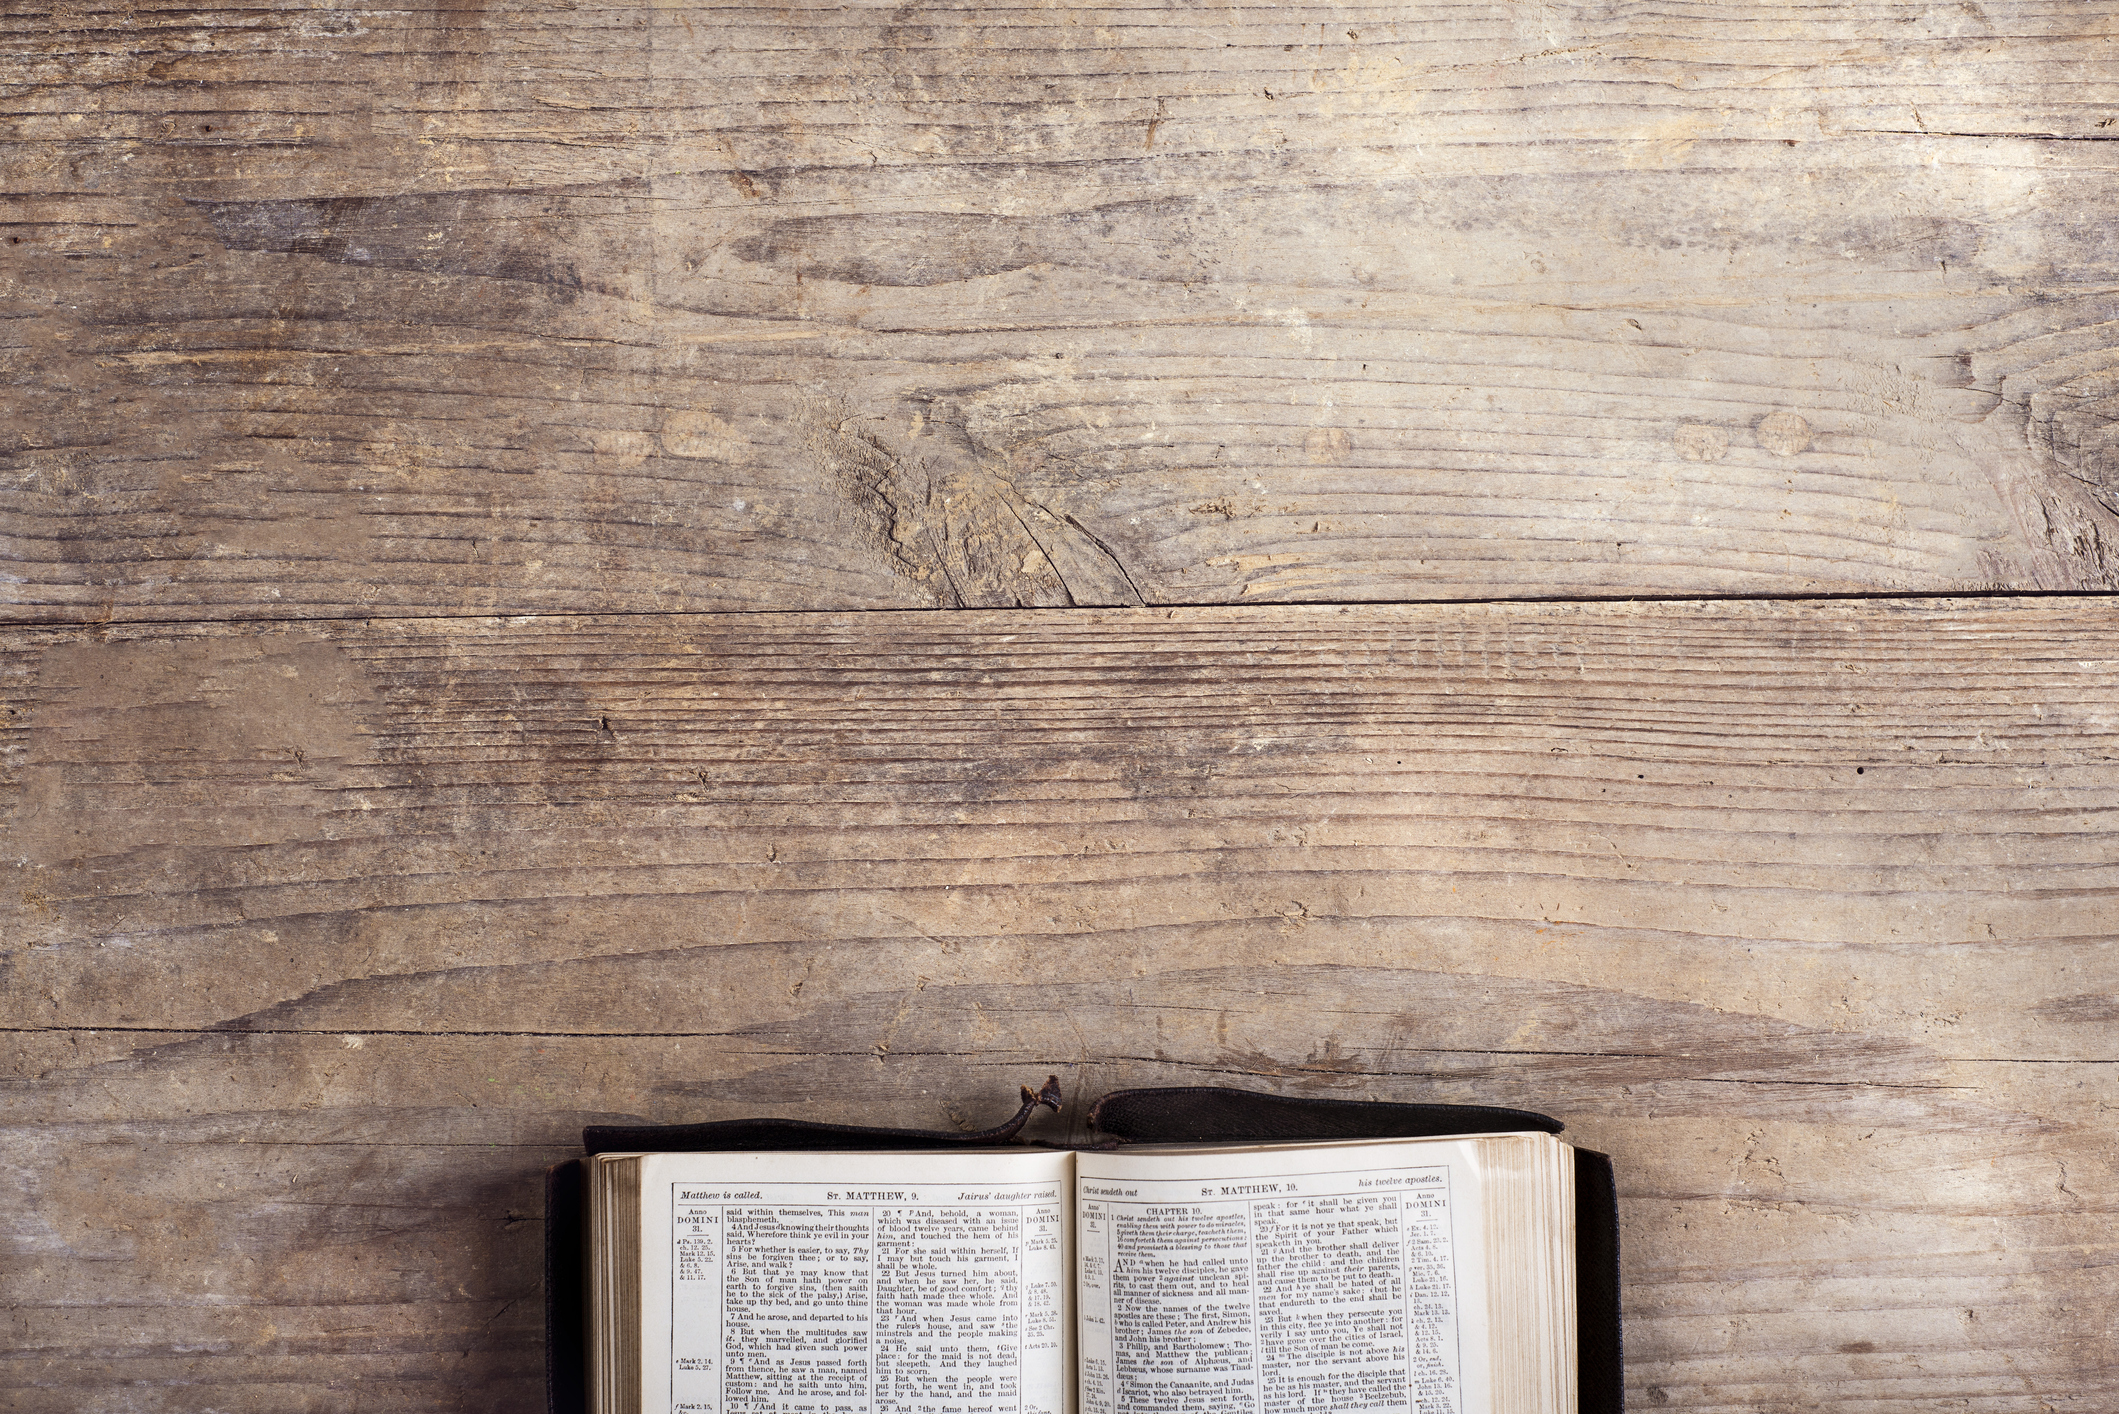 a bible open on a wooden desk